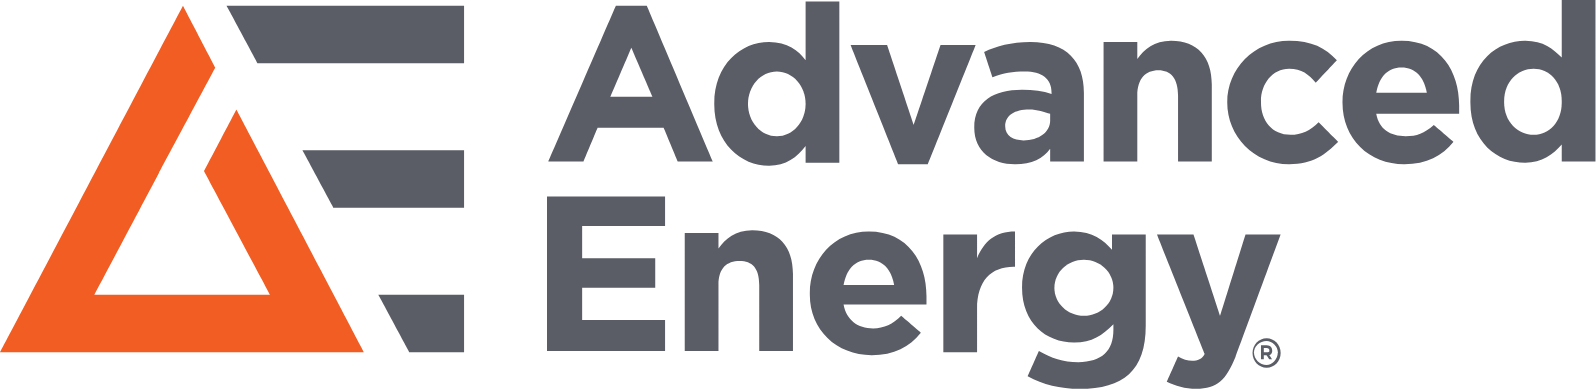 Advanced Energy logo large (transparent PNG)